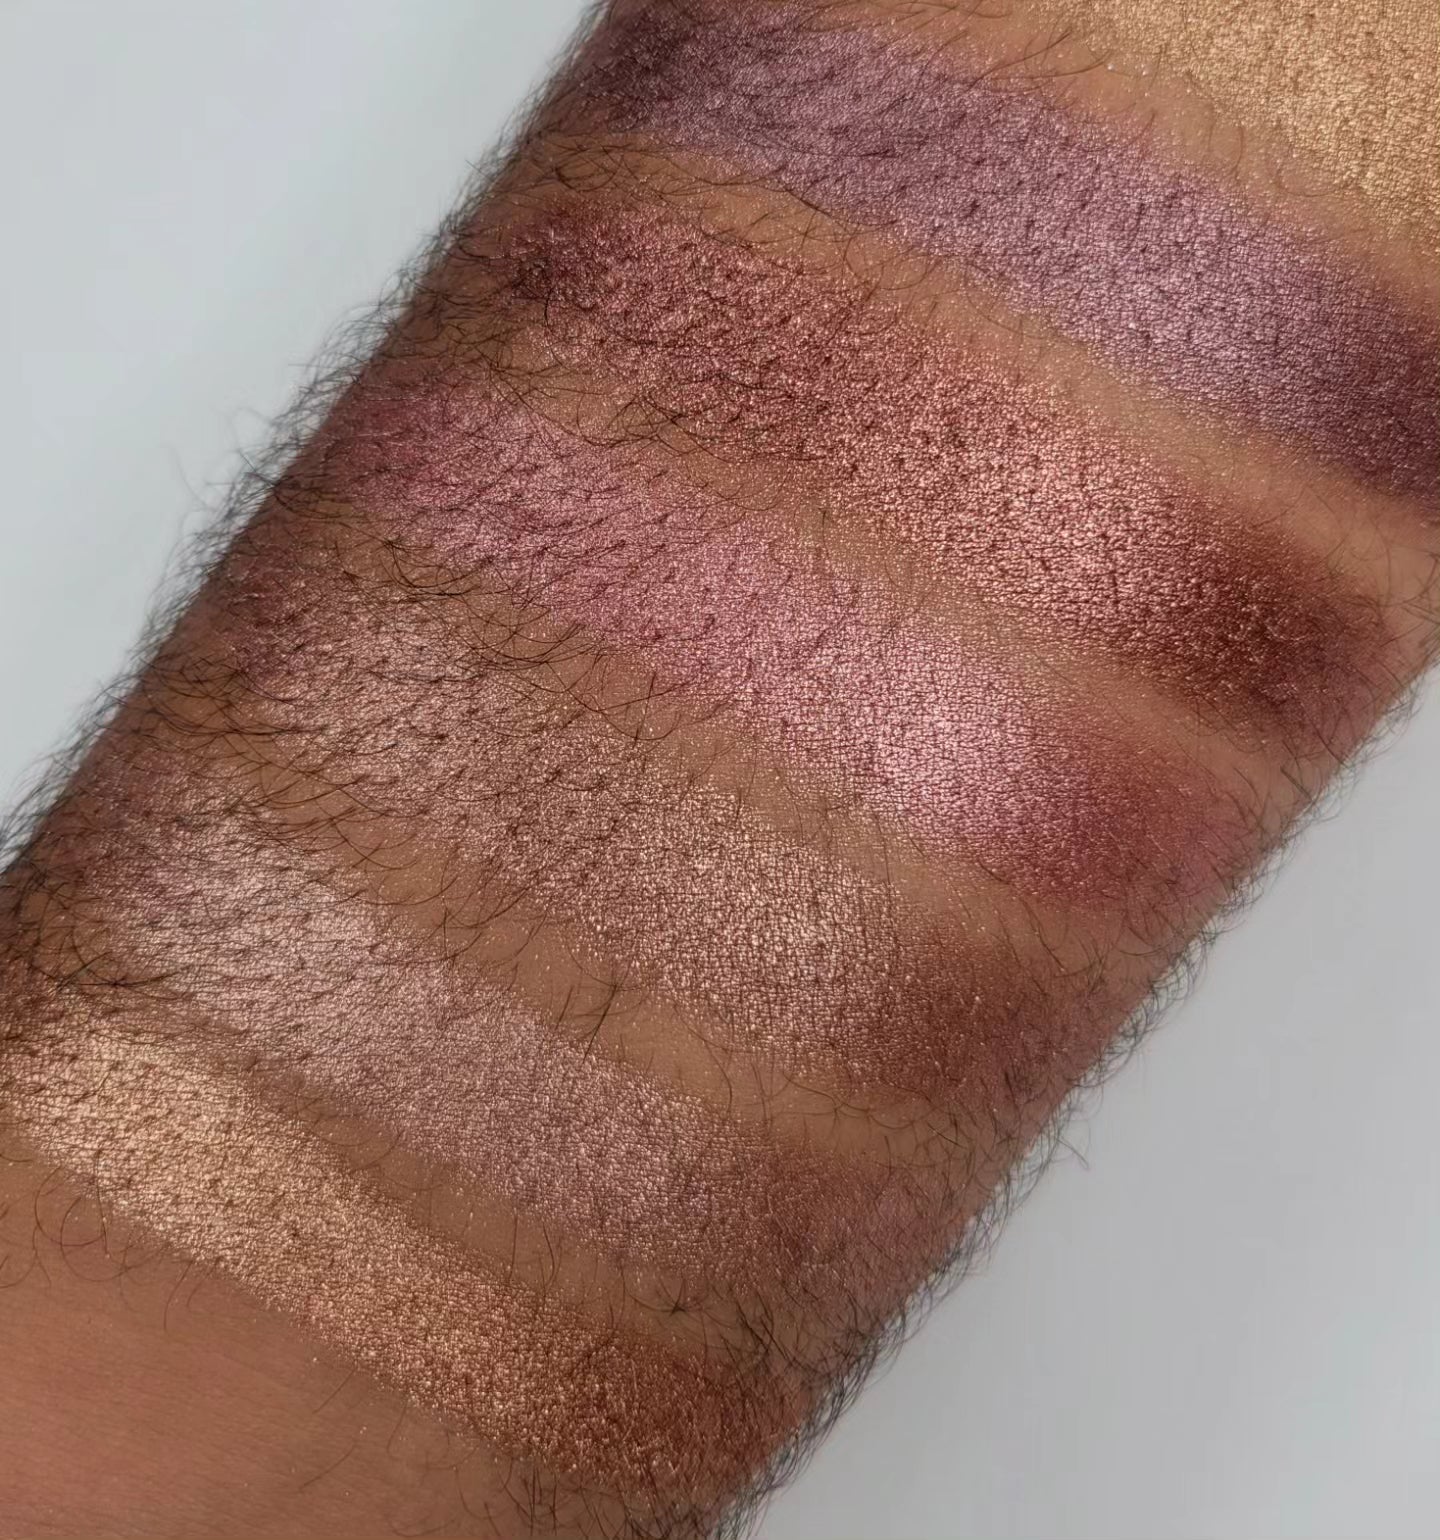 6 Shimmer Eyeshadow Bundle - Pinks/Browns/Reds